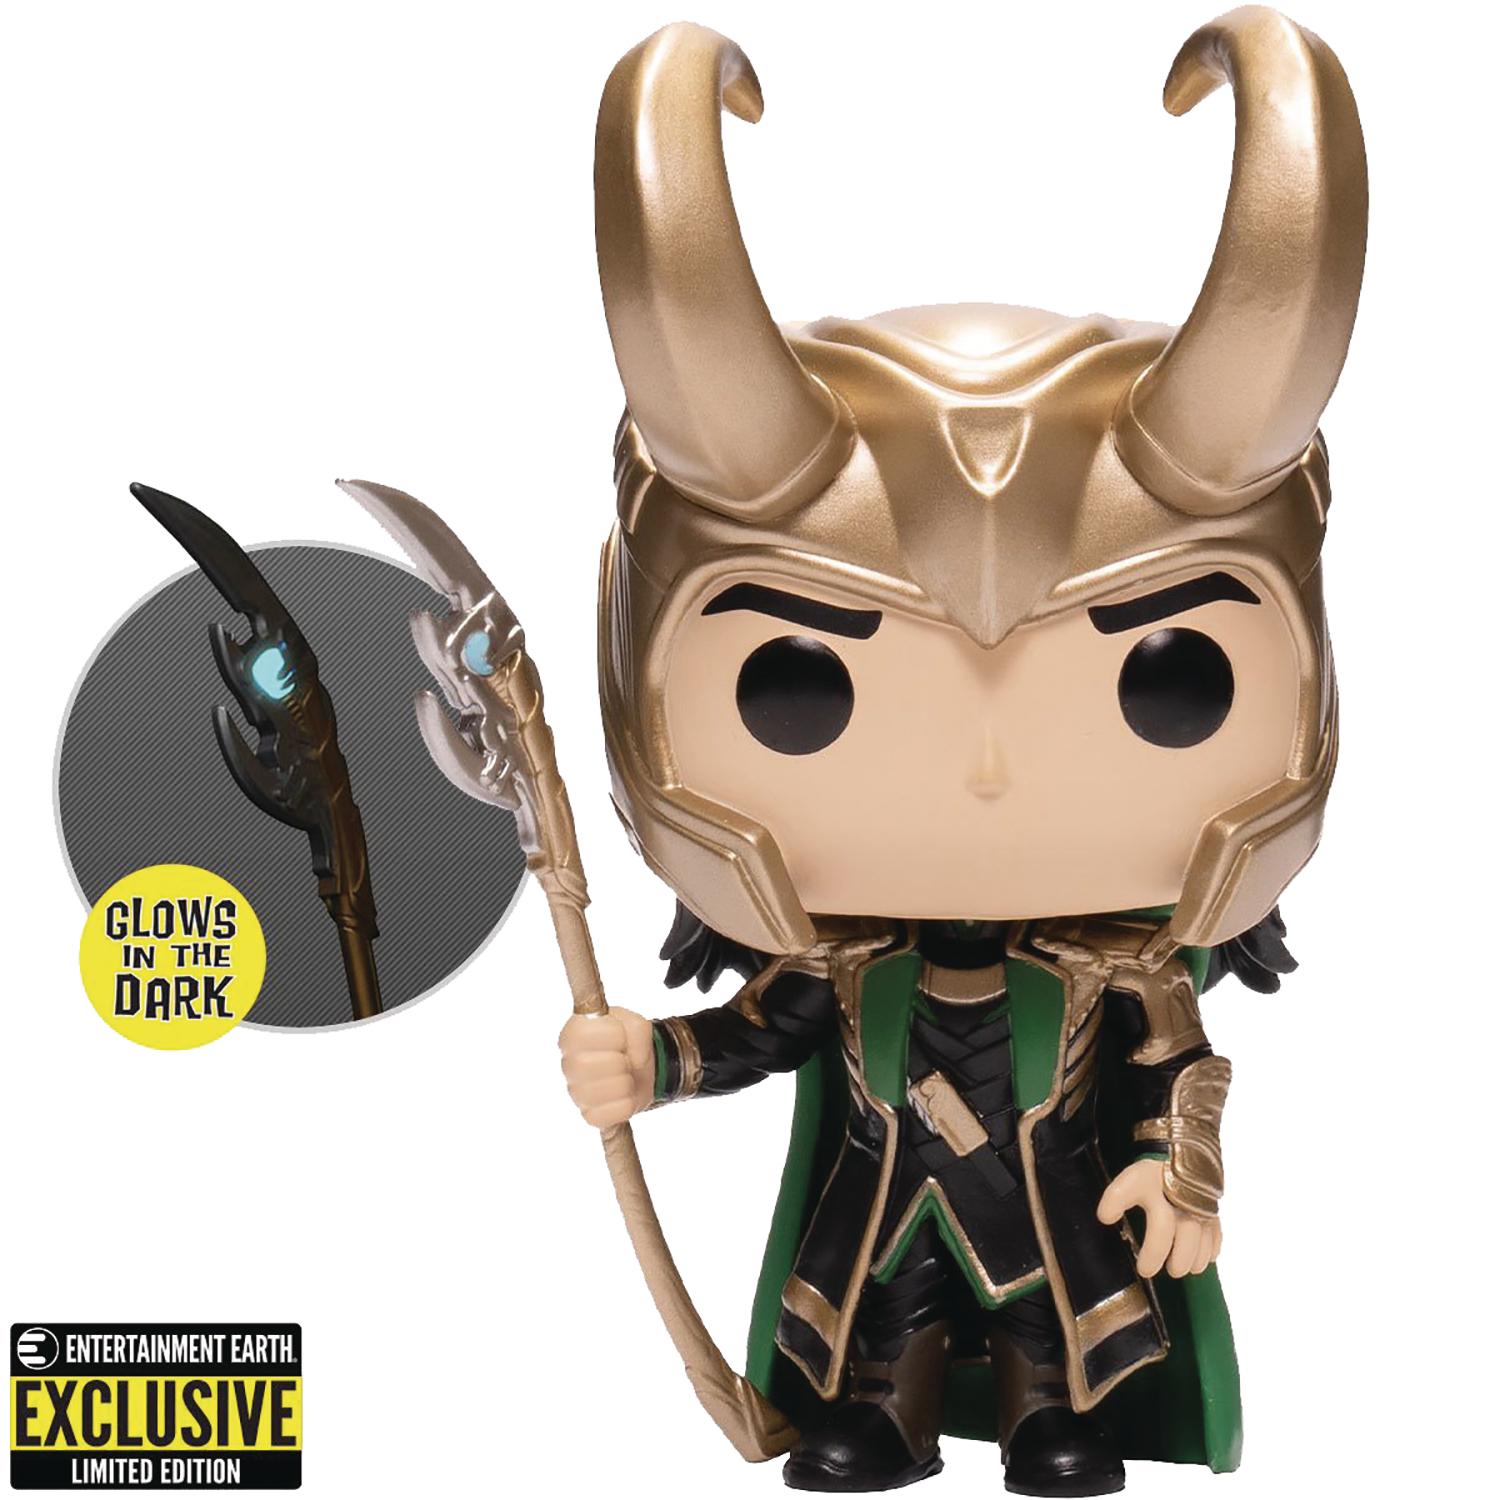 Pop Avengers Loki with glow-in-the-dark Scepter Vinyl Figure